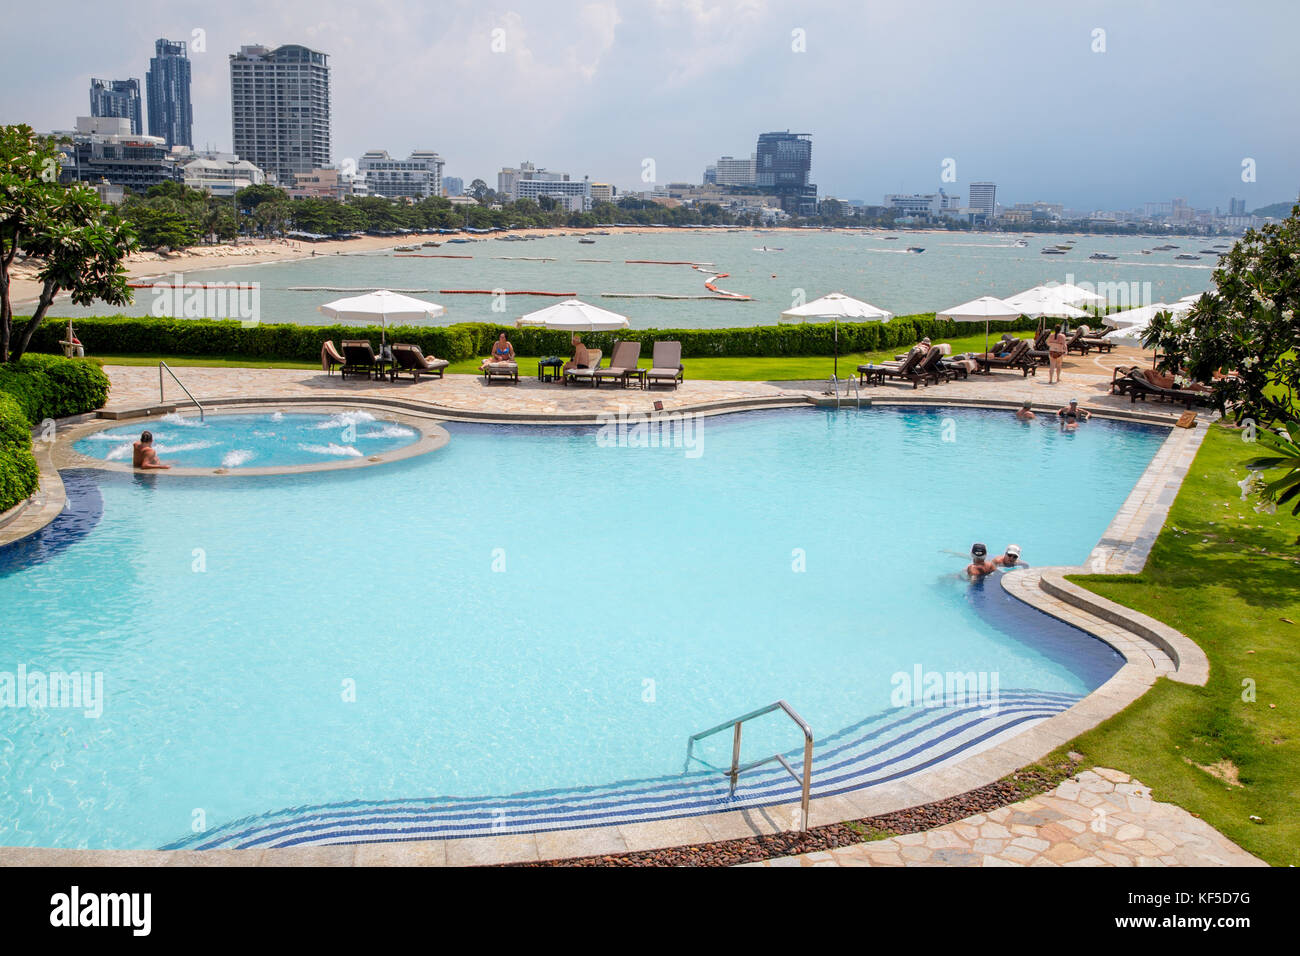 Dusit Thani luxury hotel and pool in Pattaya, Thailand Stock Photo